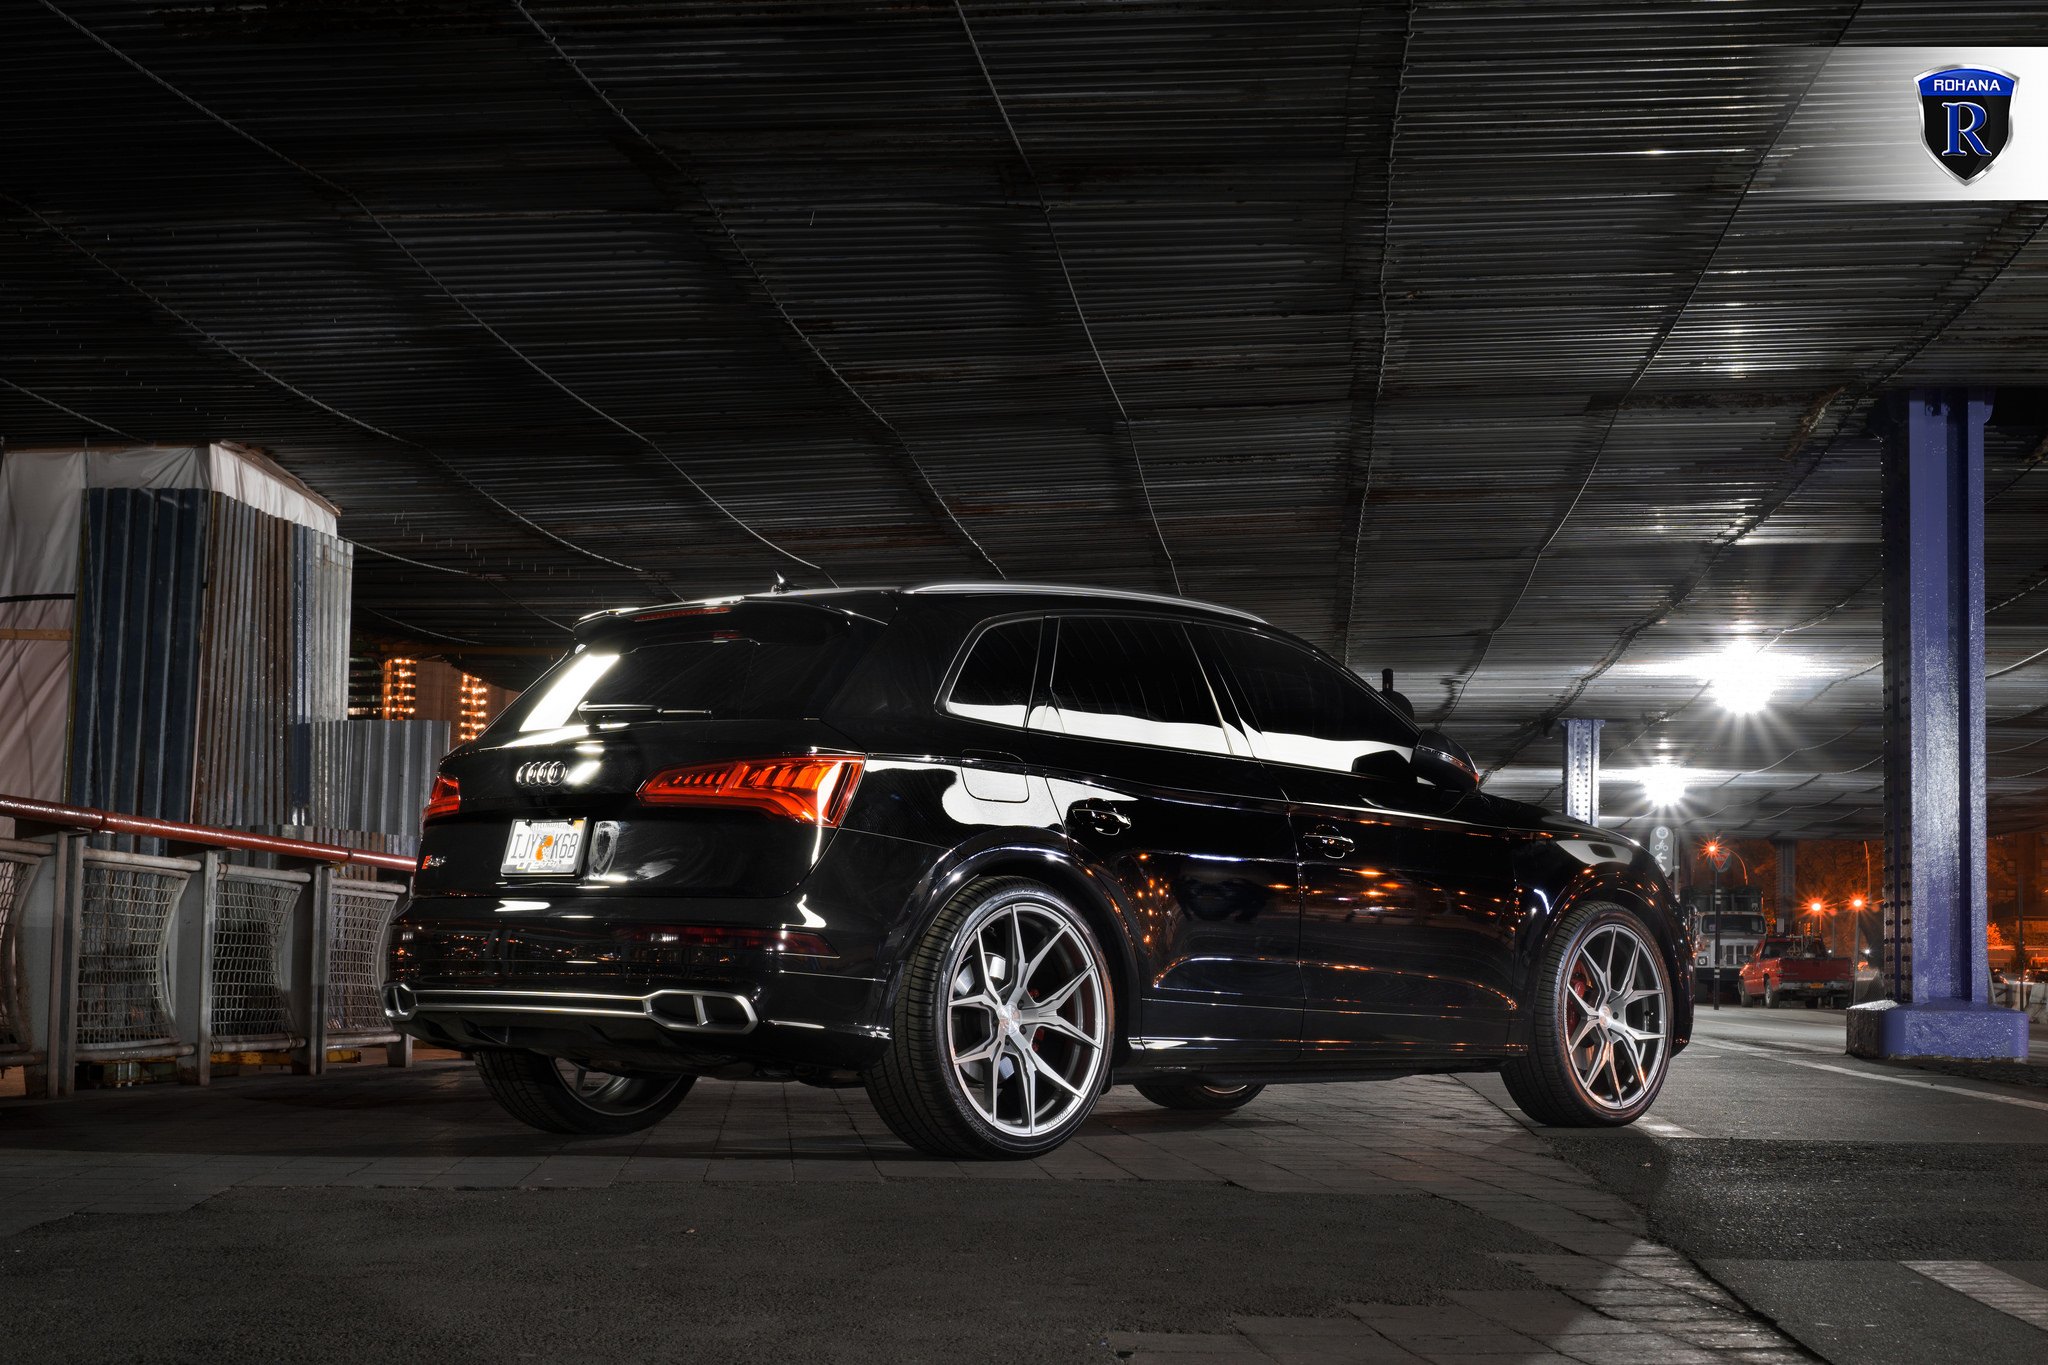 Roofline Spoiler with Light on Black Audi Q5 - Photo by Rohana